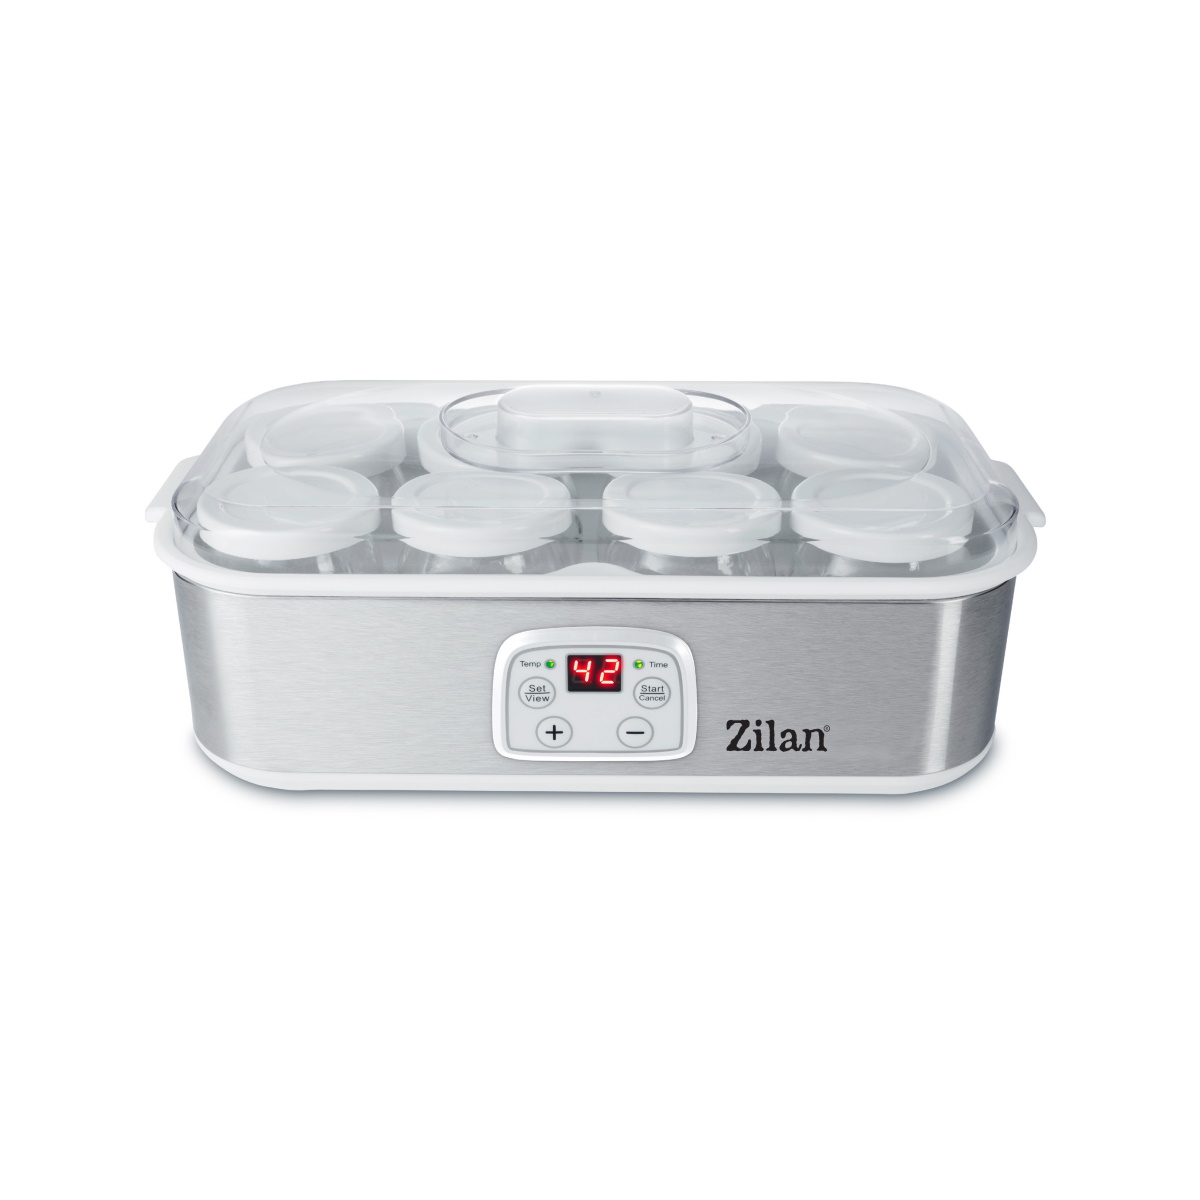 Aparat pentru facut iaurt Zilan ZLN6104 Gri, afisaj LED, timer, termostat reglabil